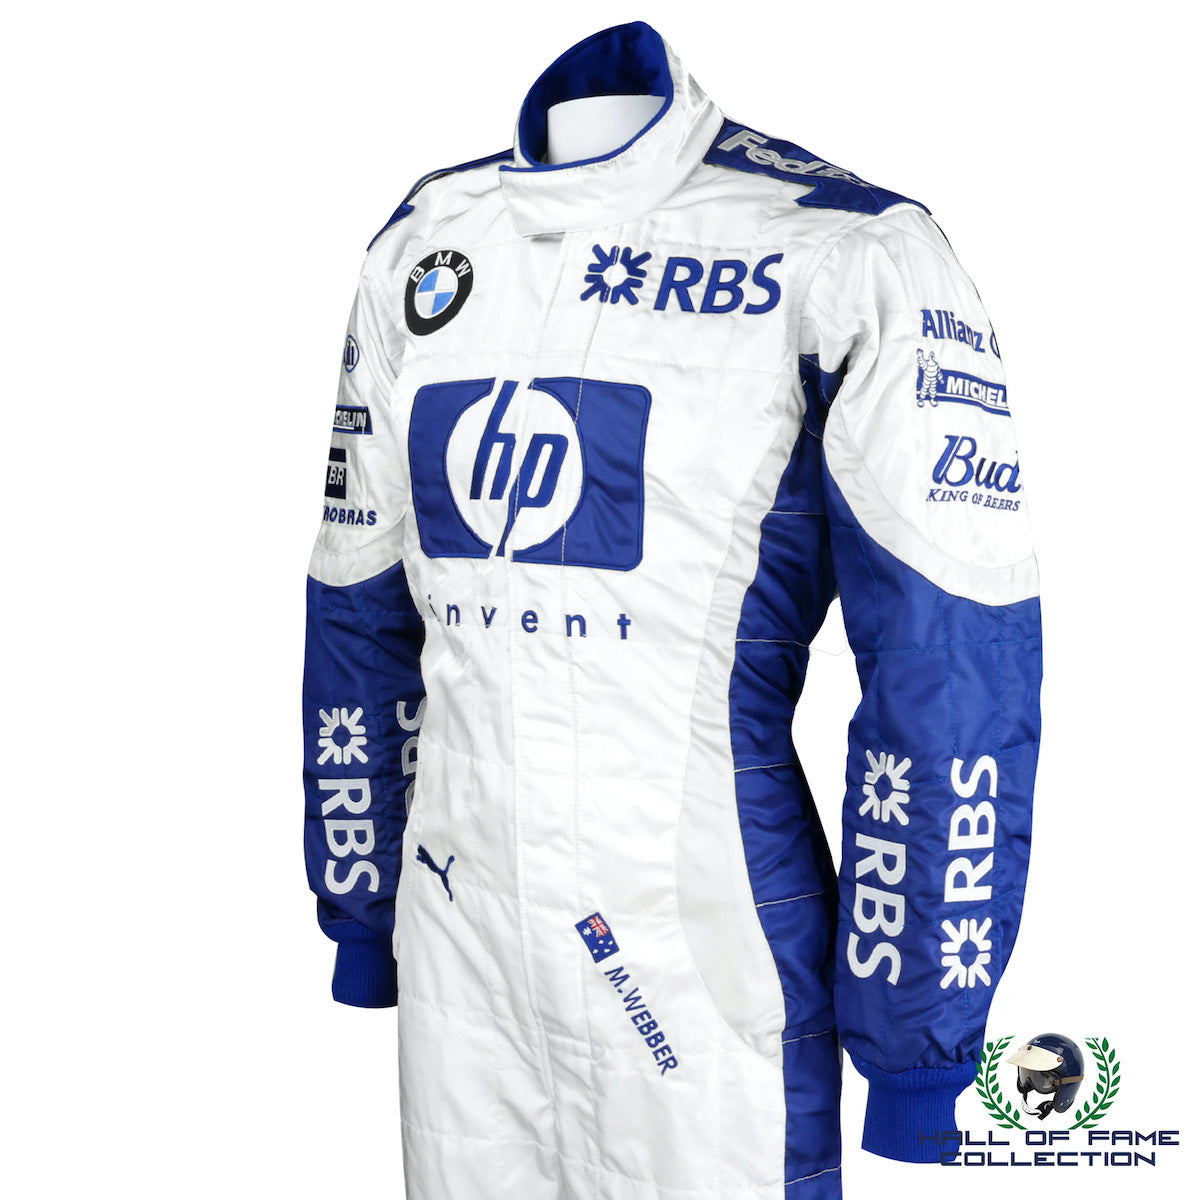 2005 Mark Webber Race Used BMW Williams F1 Suit